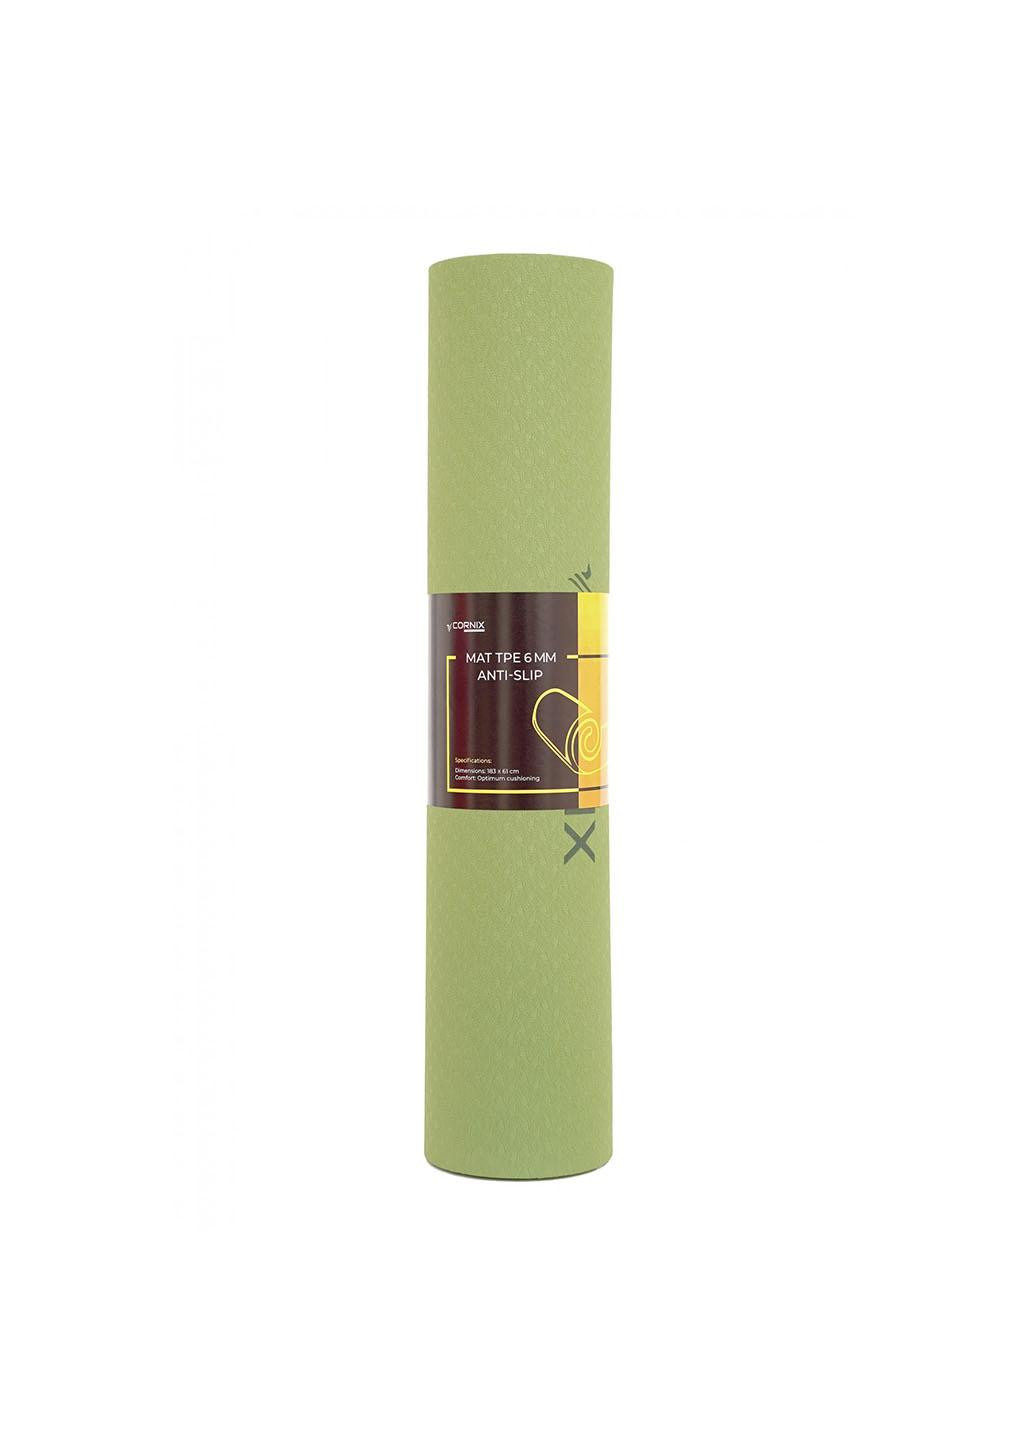 Коврик спортивный Cornix TPE 183 x 61 x 0.6 cм для йоги и фитнеса XR-0008 Green/Grey No Brand (260378600)